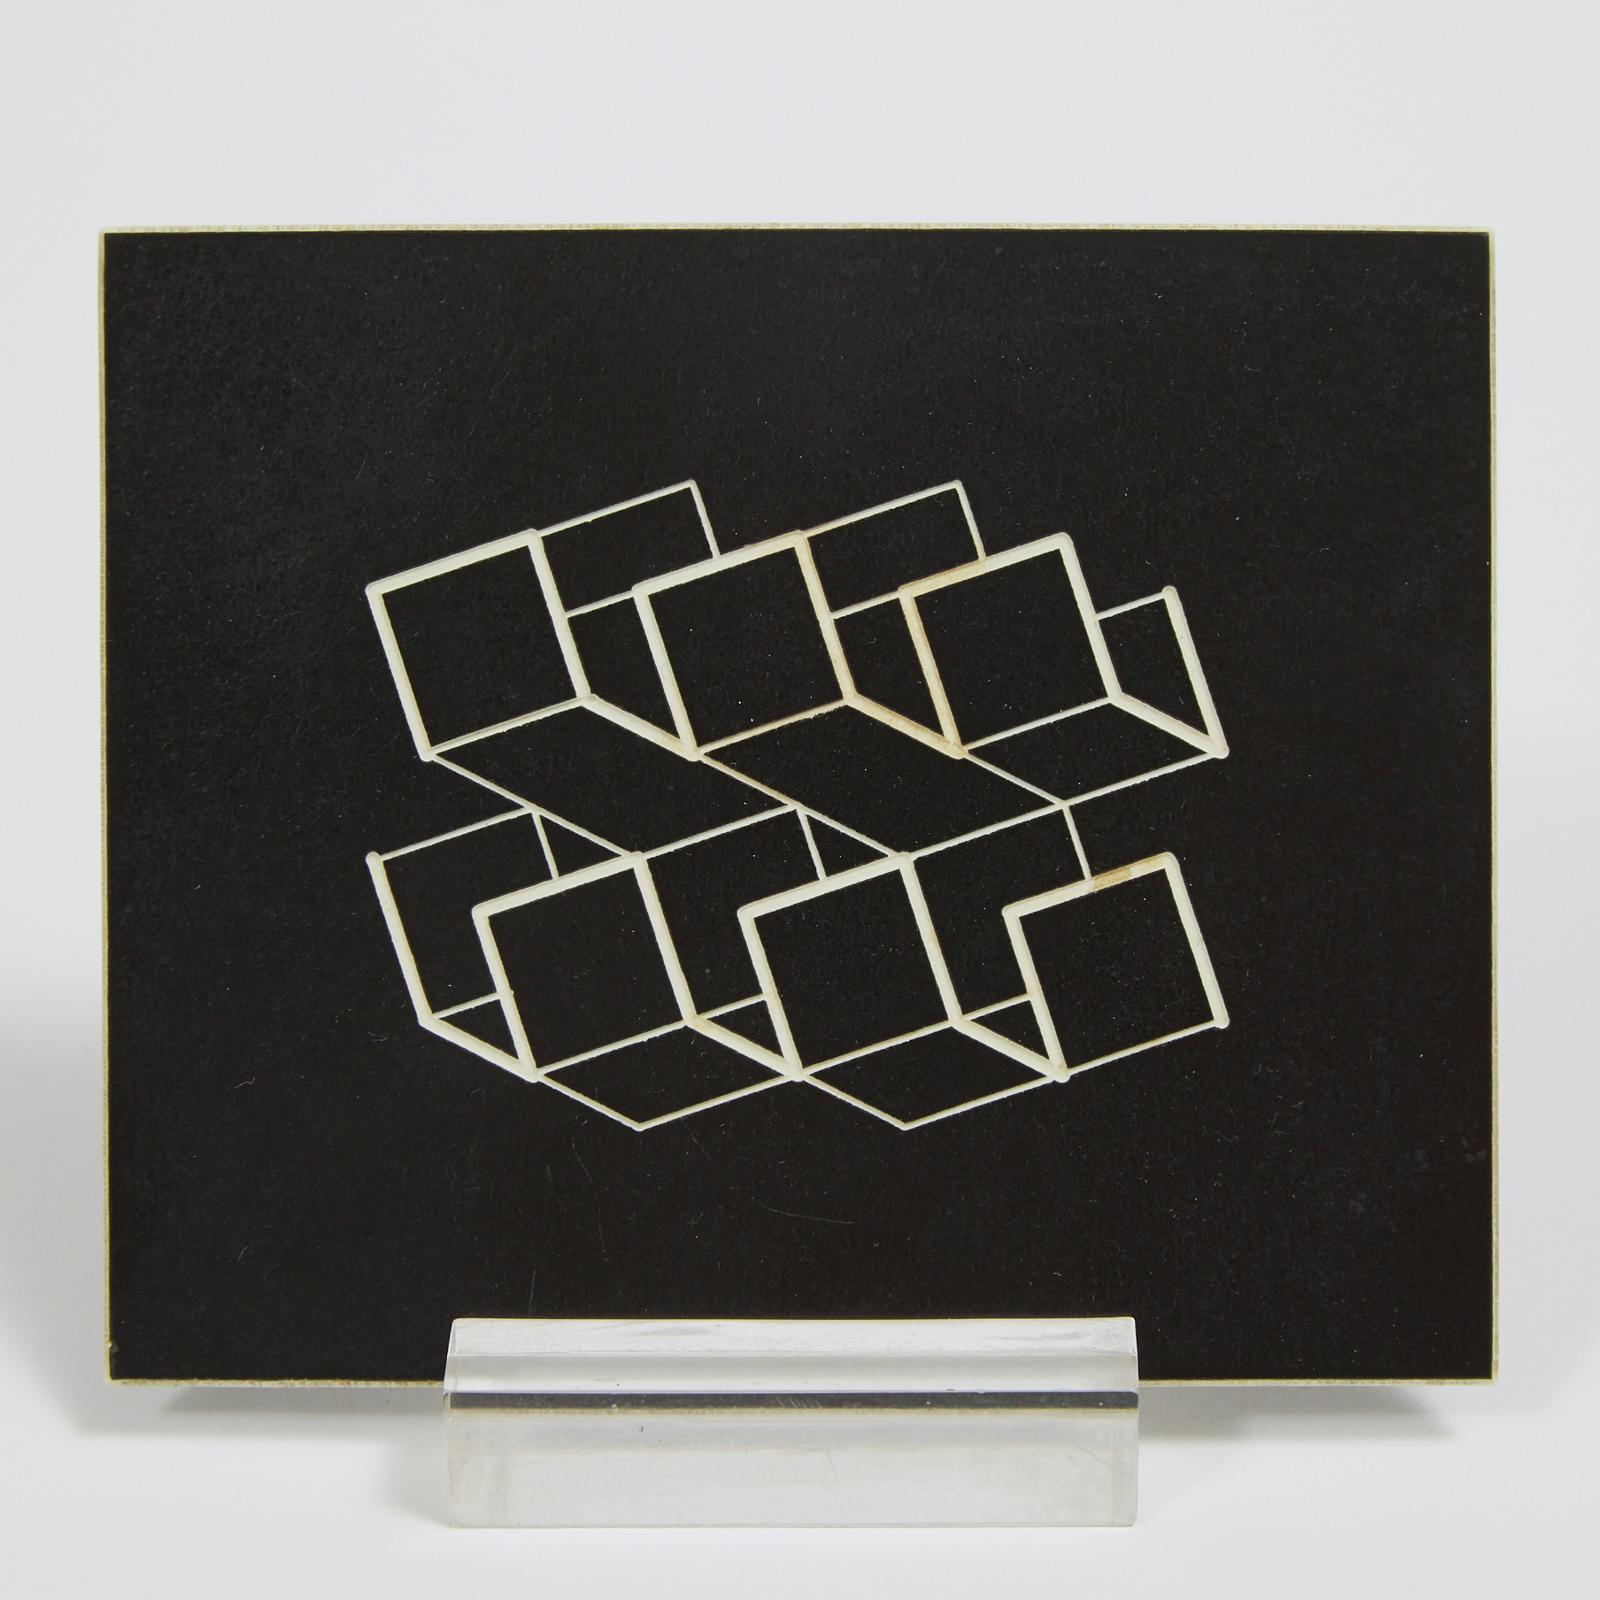 Josef Albers (1888-1976) - Structural Constellation, Circa 1955-1965